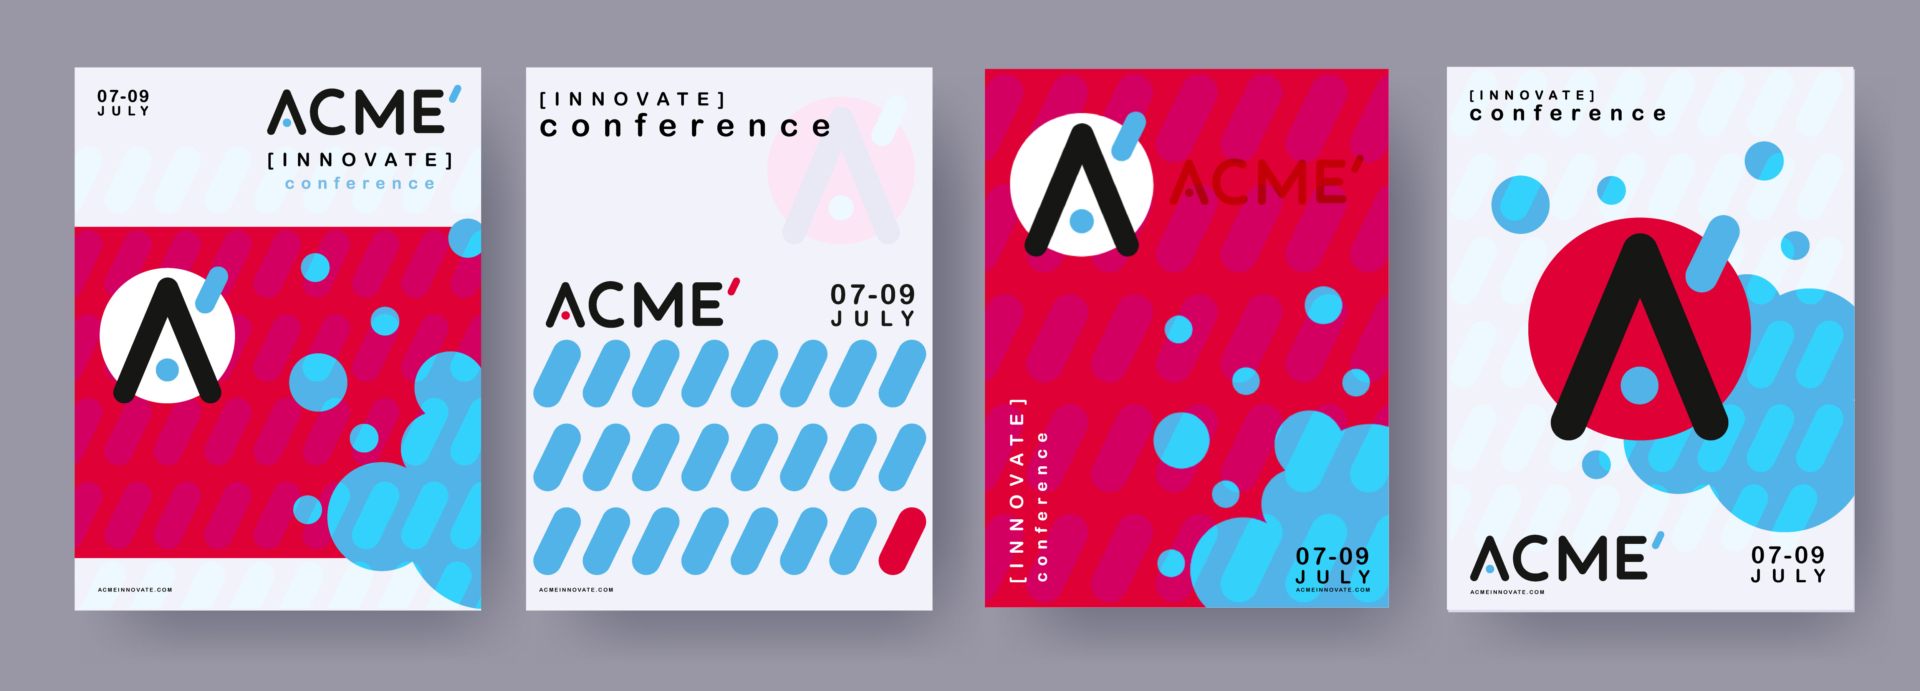 ACME catalog covers